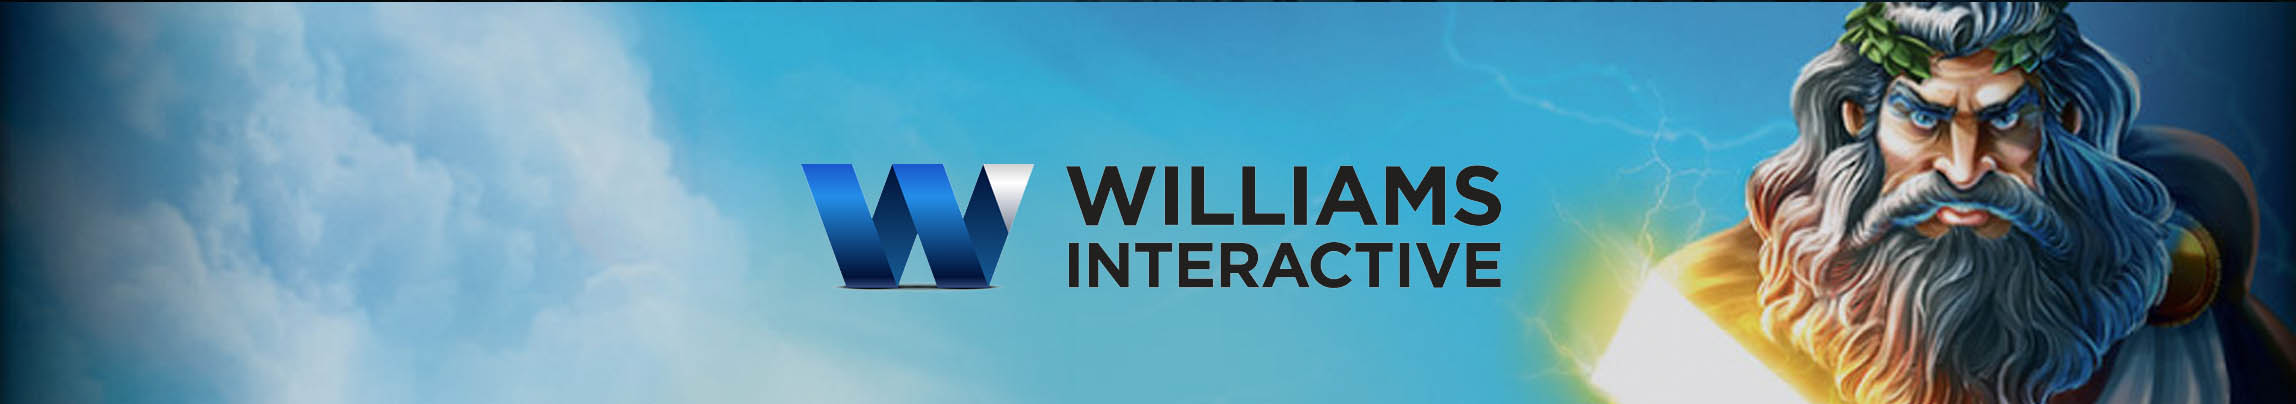 williams interactive logo